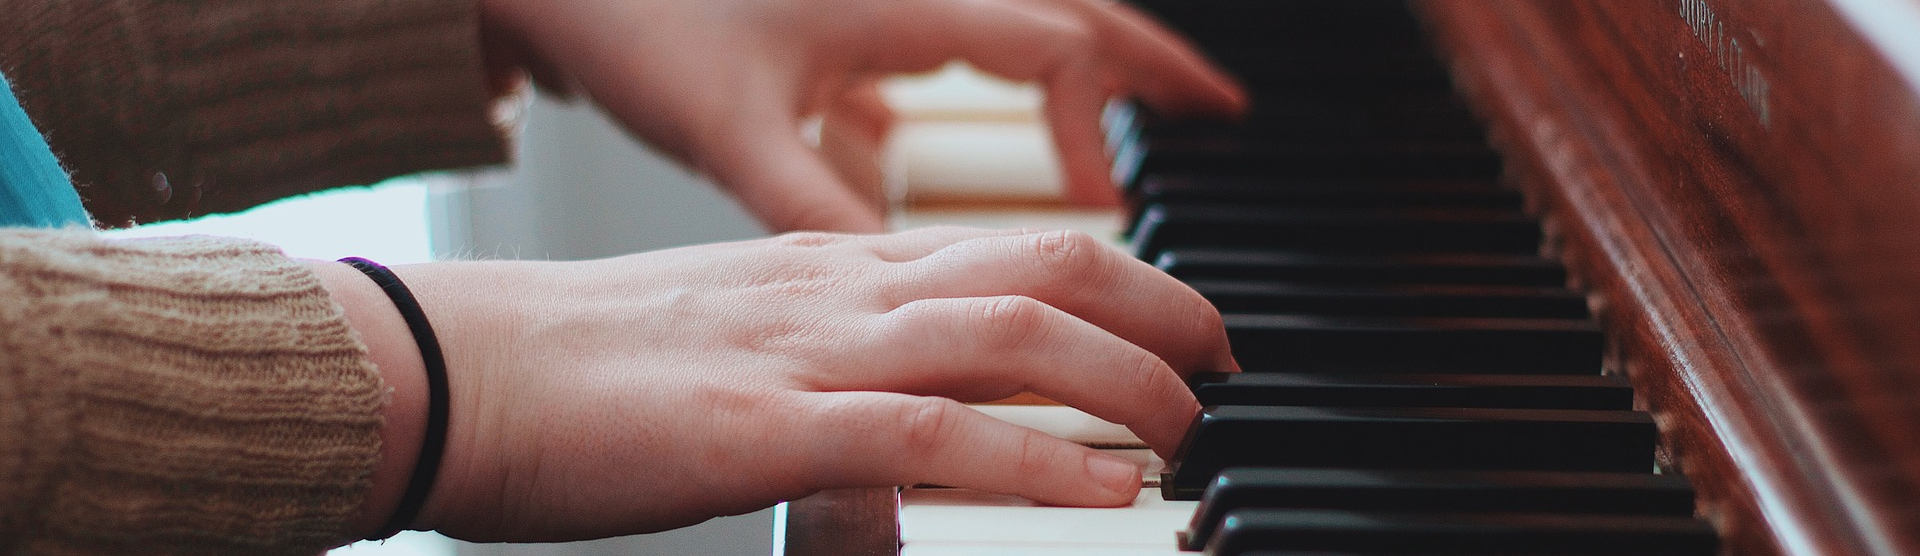 Fingersätze am Klavier